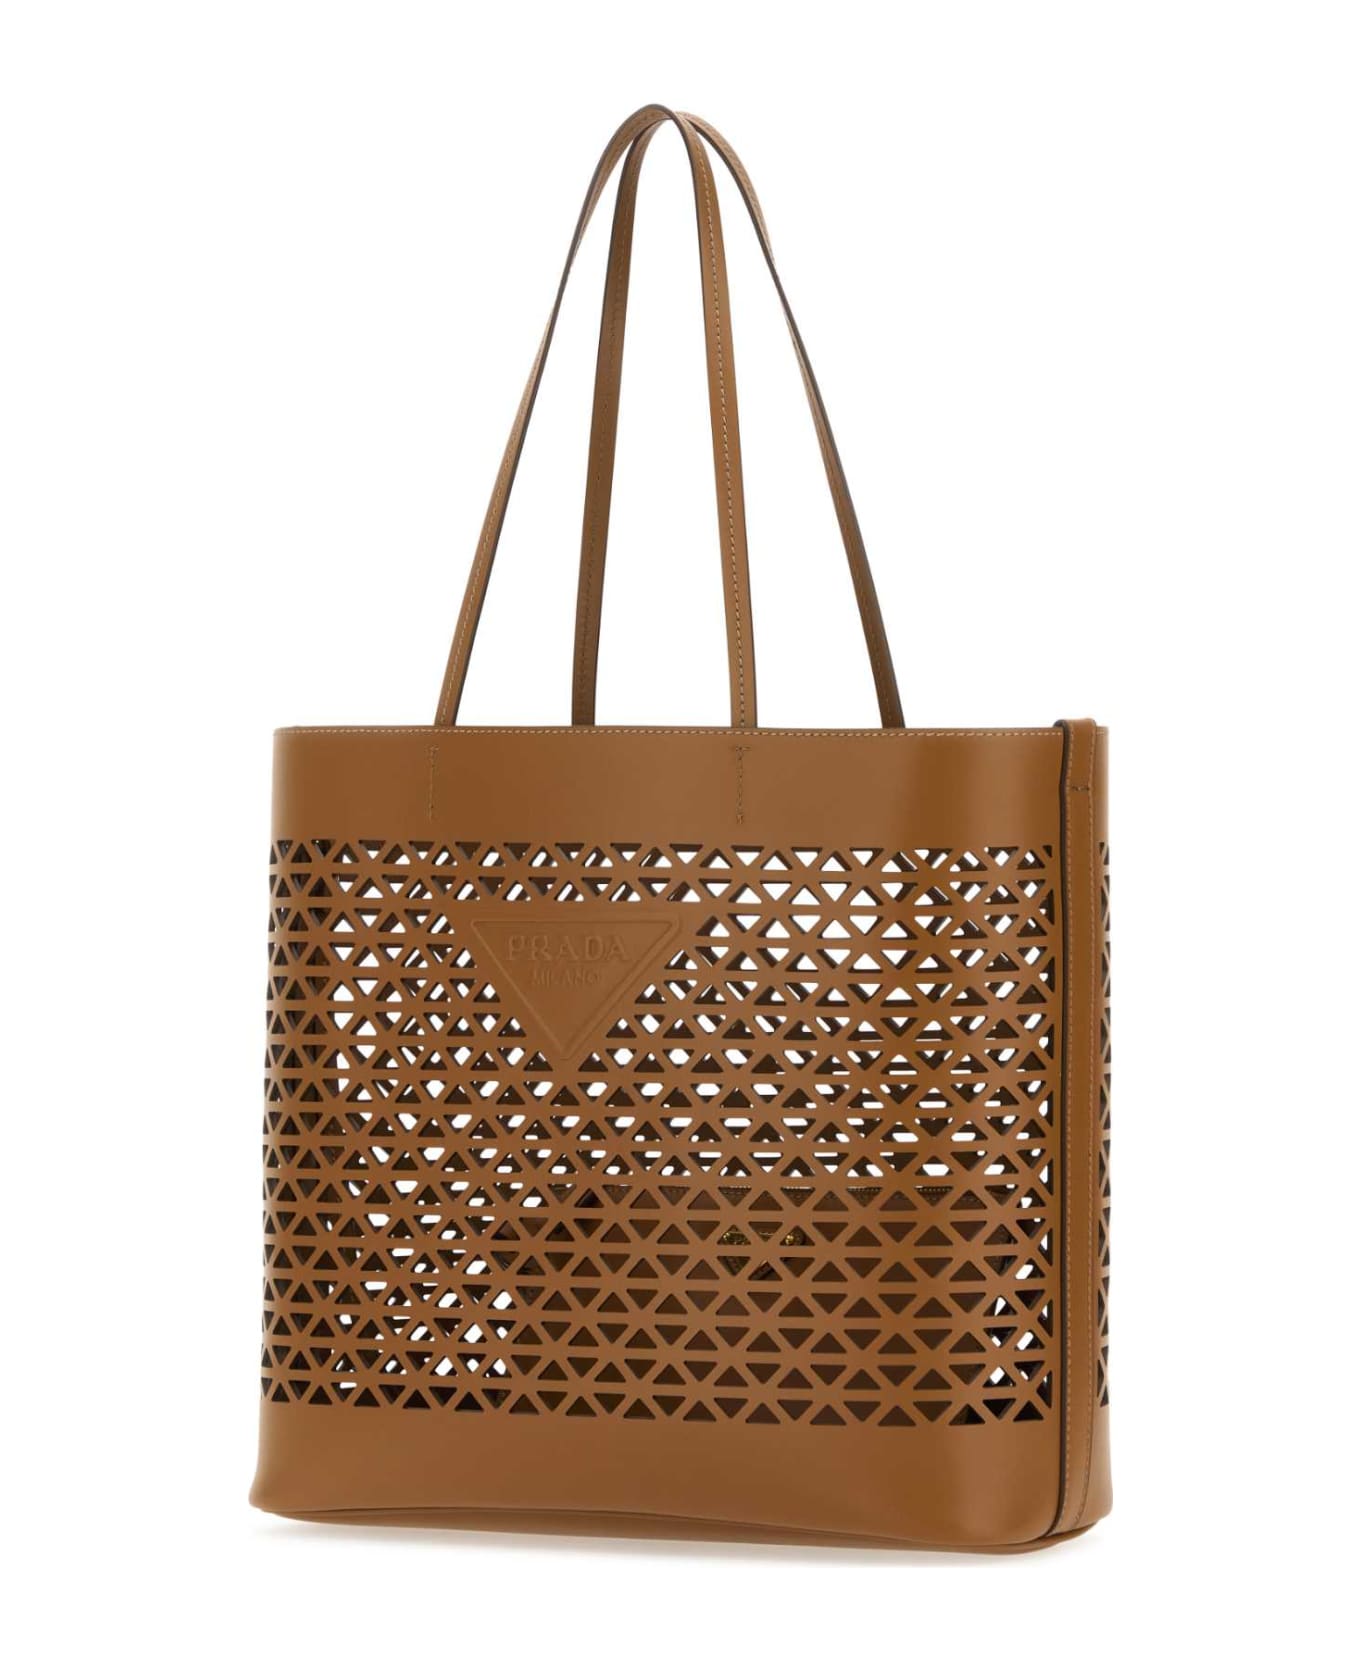 Prada Caramel Leather Shopping Bag - CARAMEL0